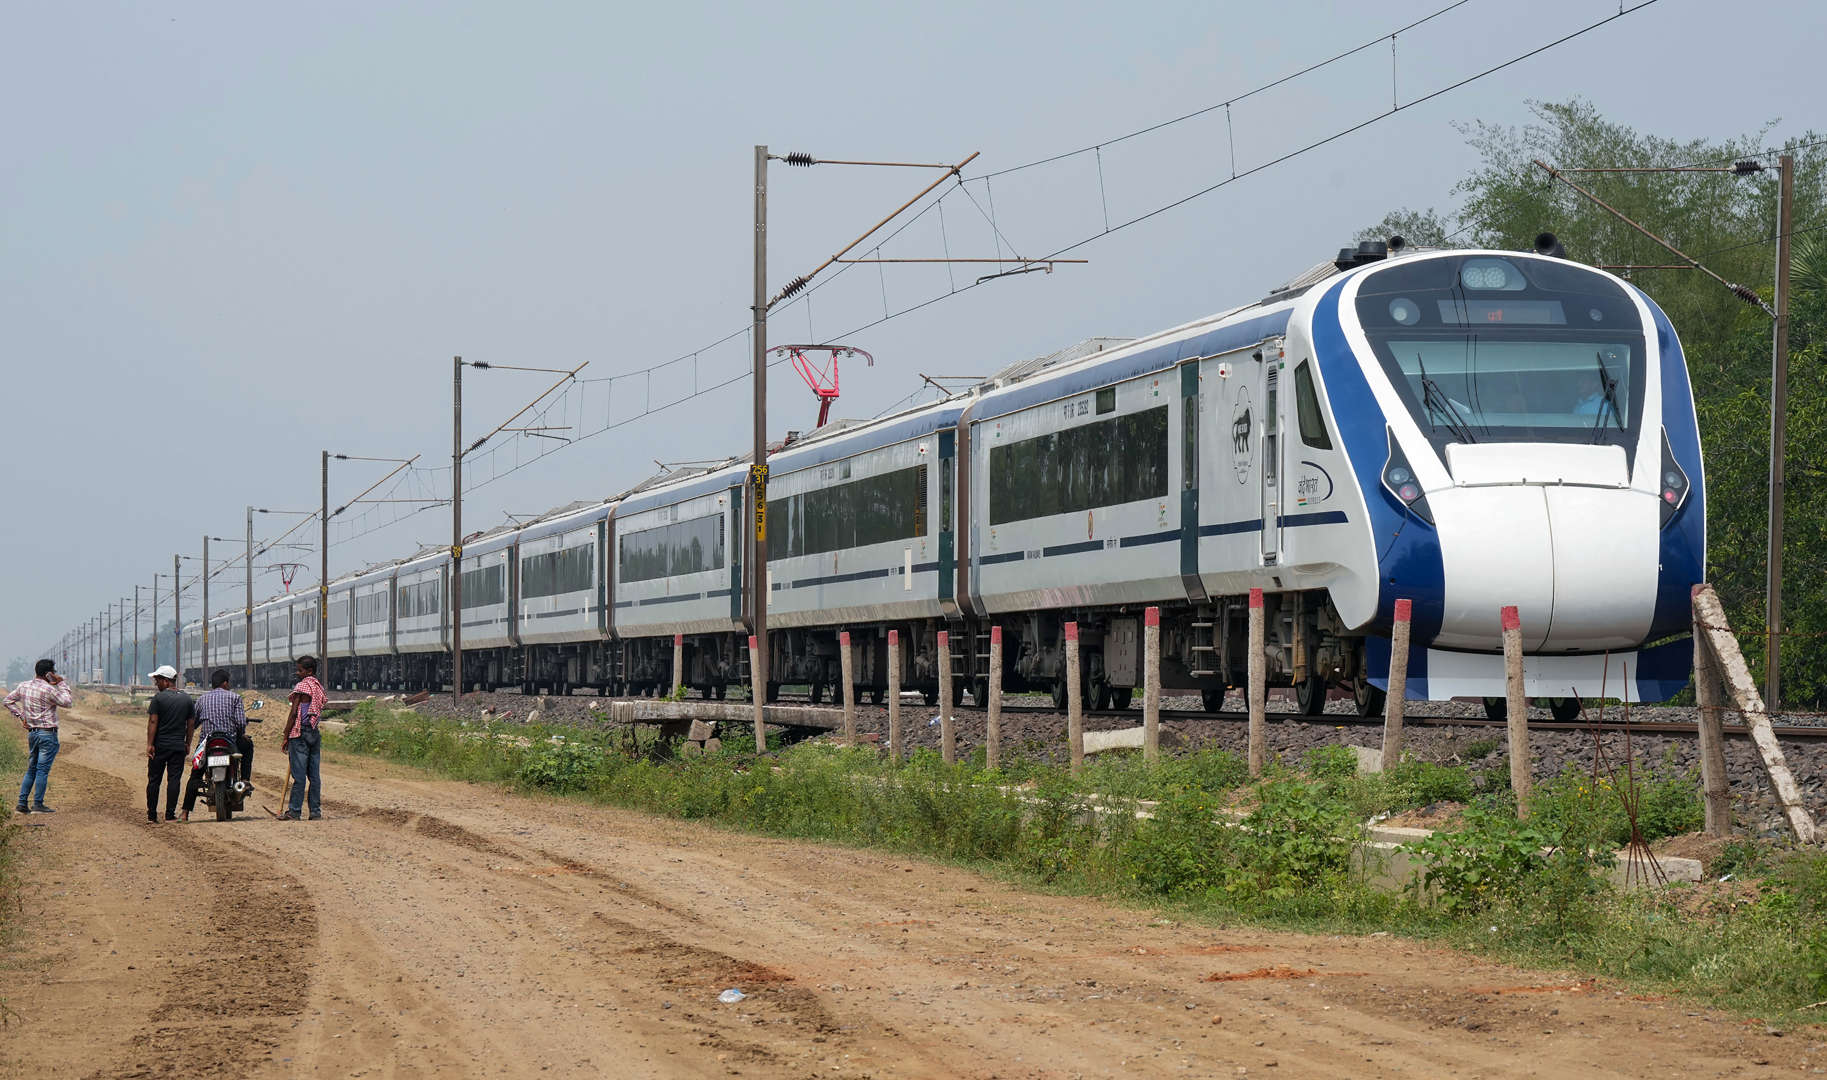 National train of India, Vande Bharat 2.0